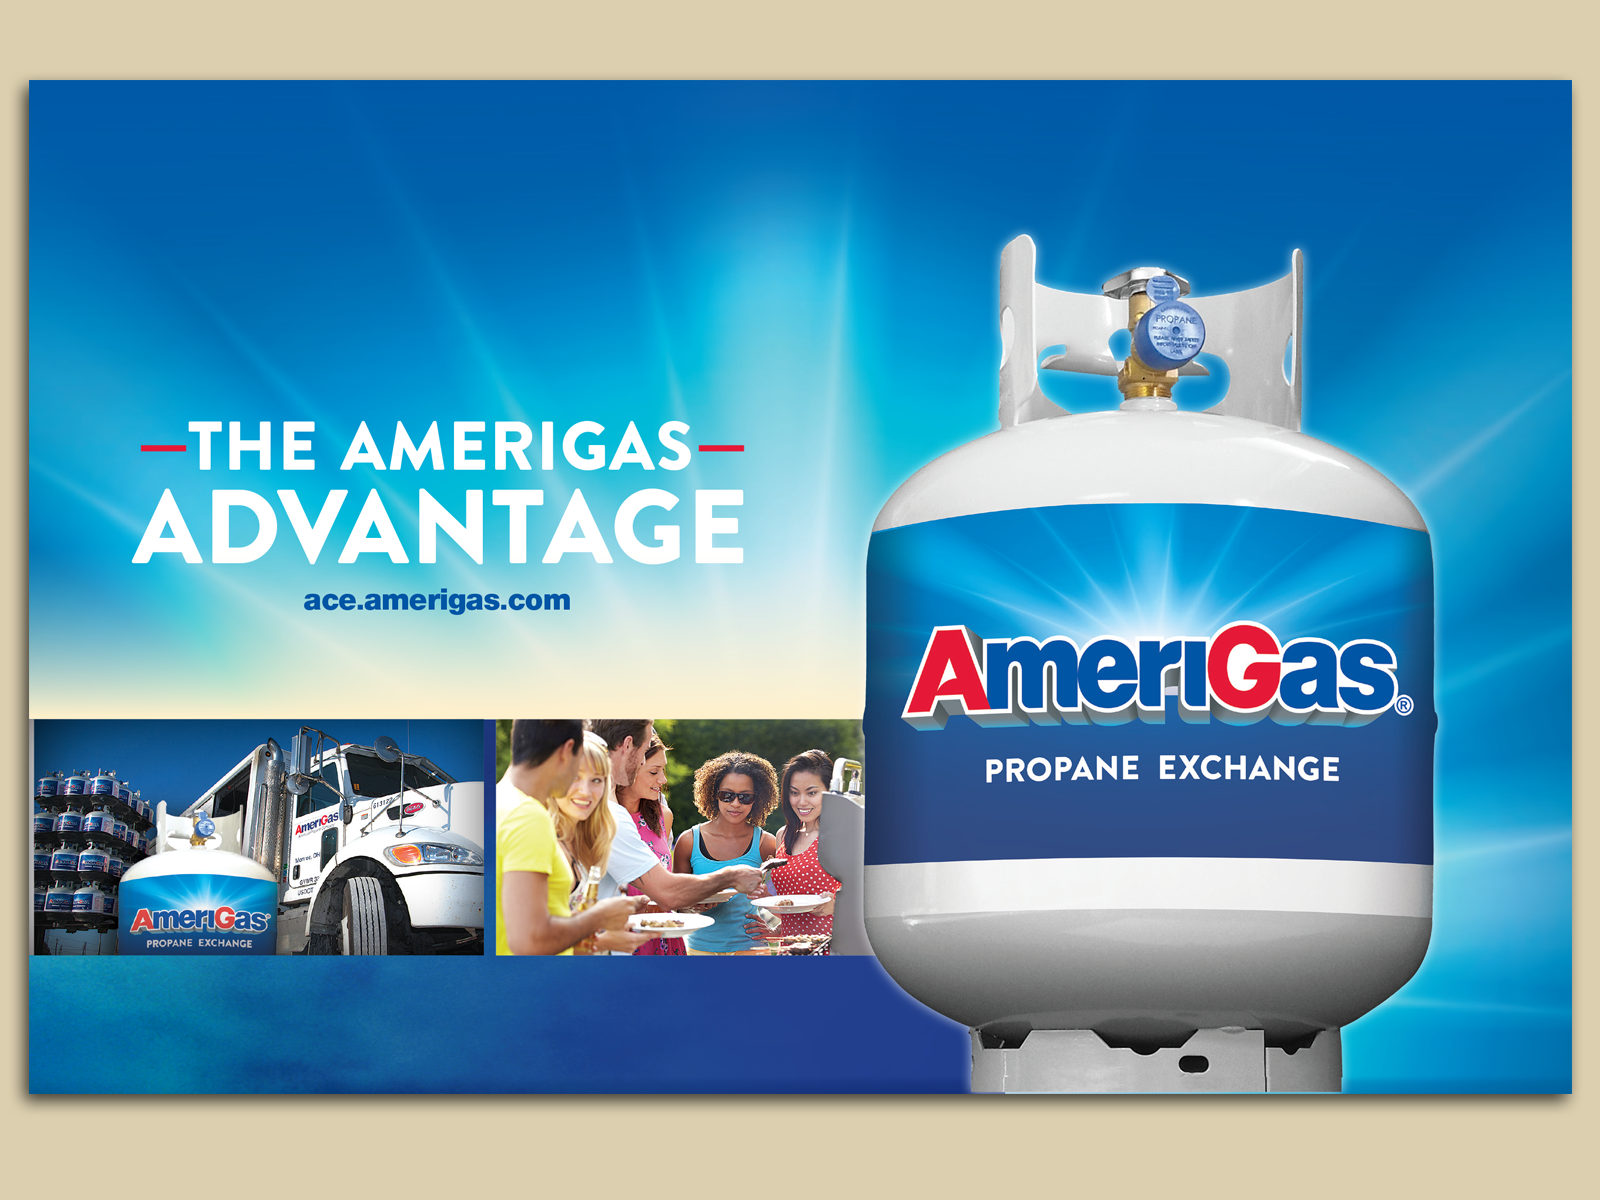 AmeriGas® Propane Exchange Guide by afa design on Dribbble